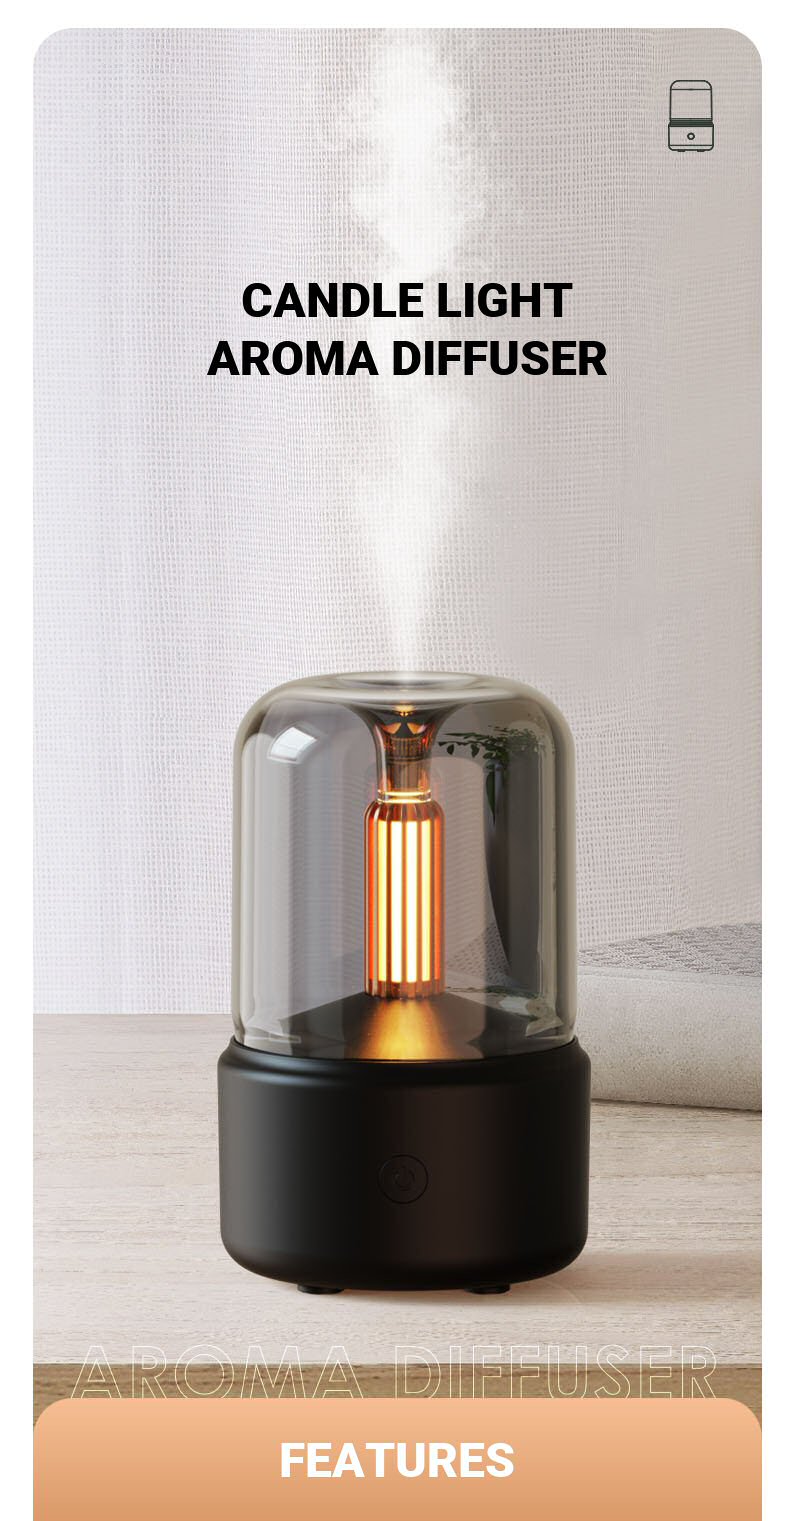 Candle Light Aroma Diffuser Description 01